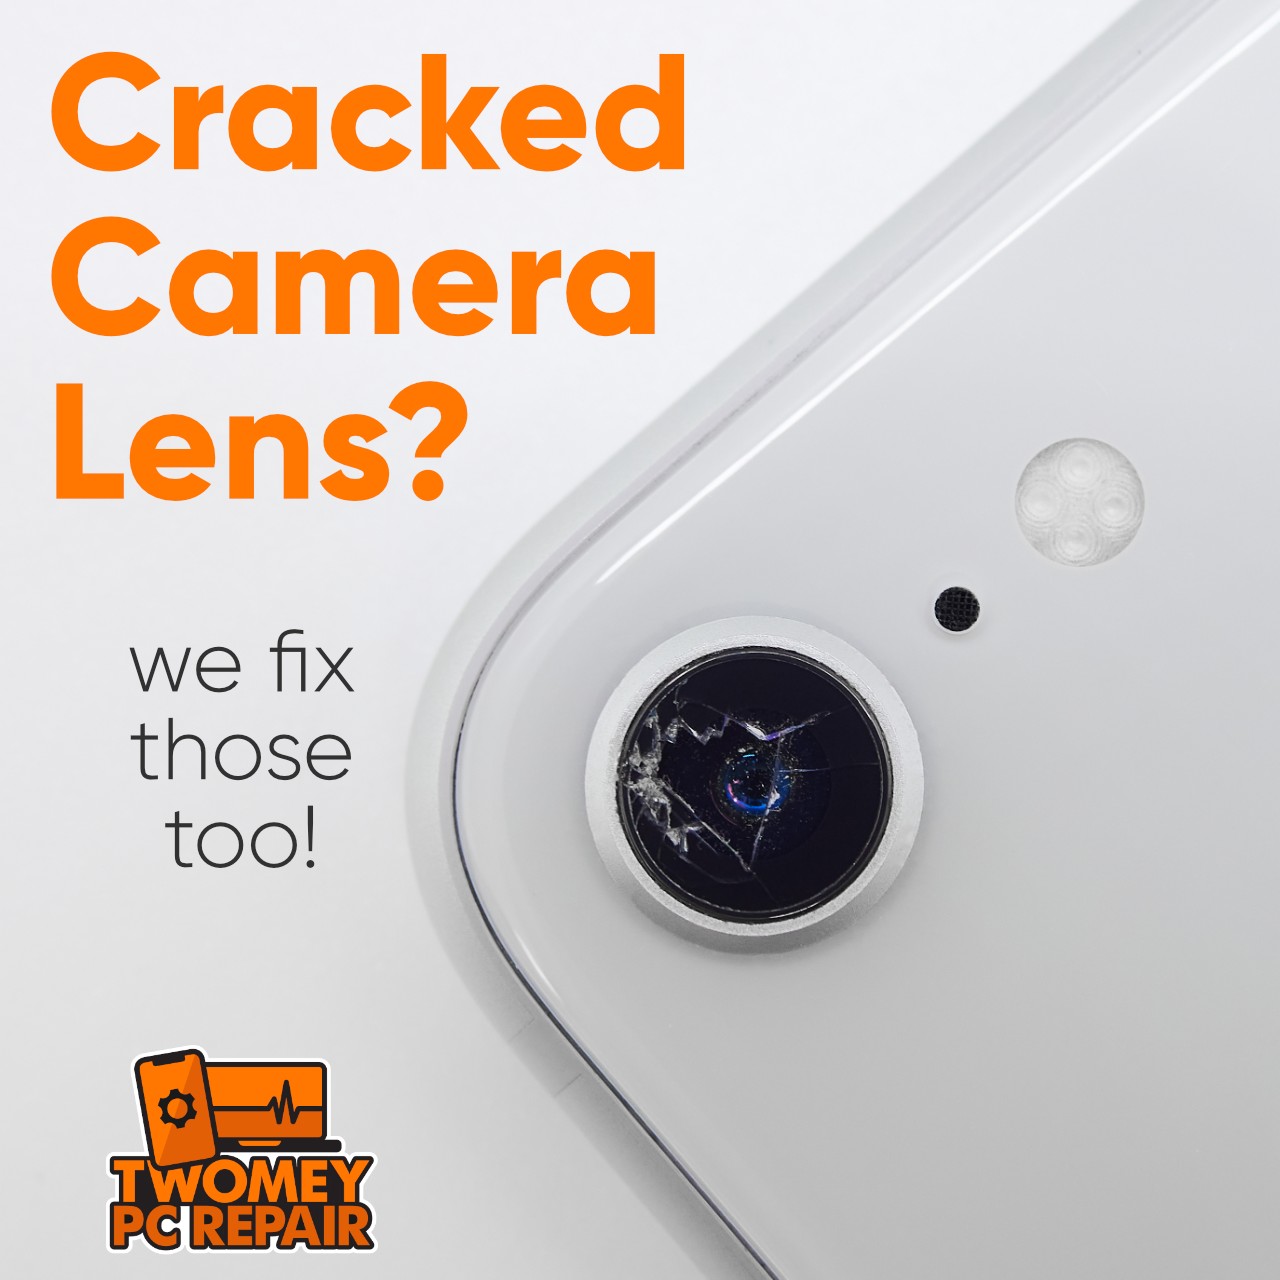 Cracked camera lens? we fix those pc repair.